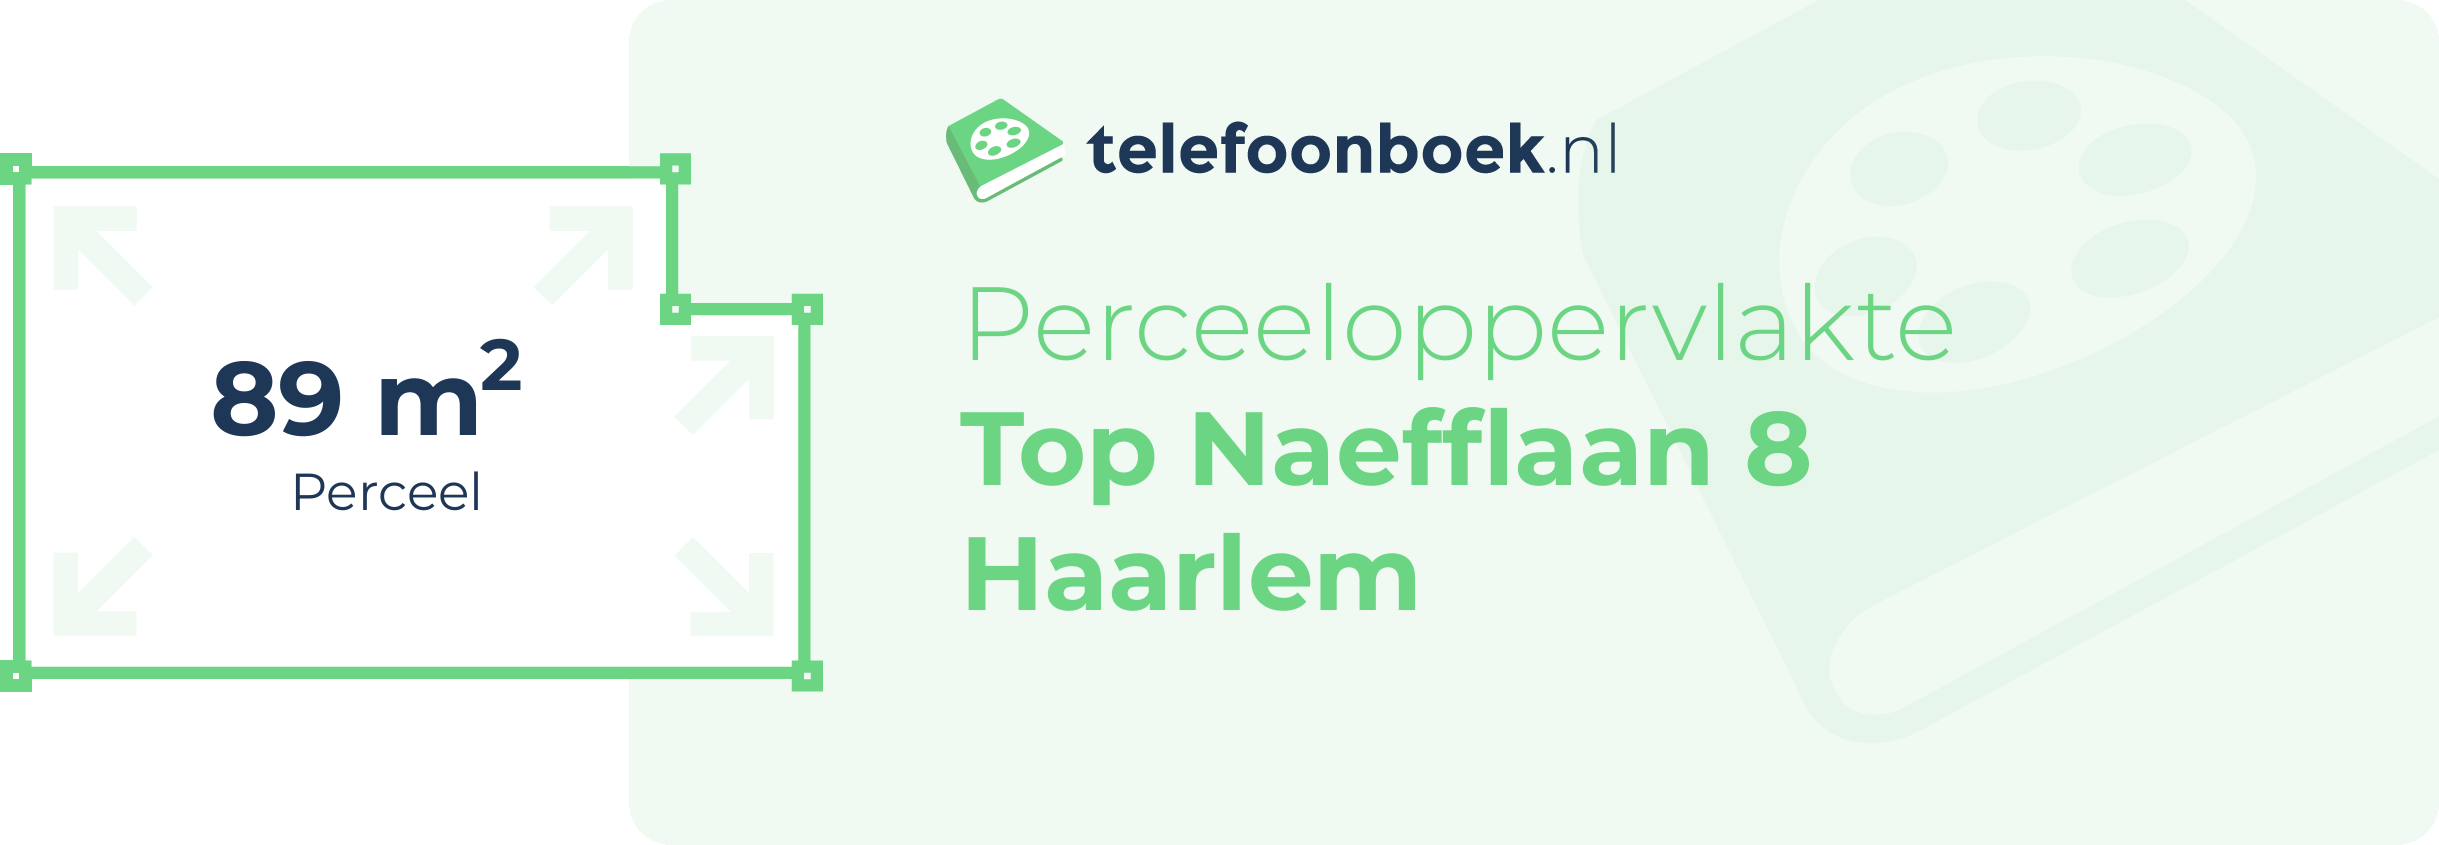 Perceeloppervlakte Top Naefflaan 8 Haarlem